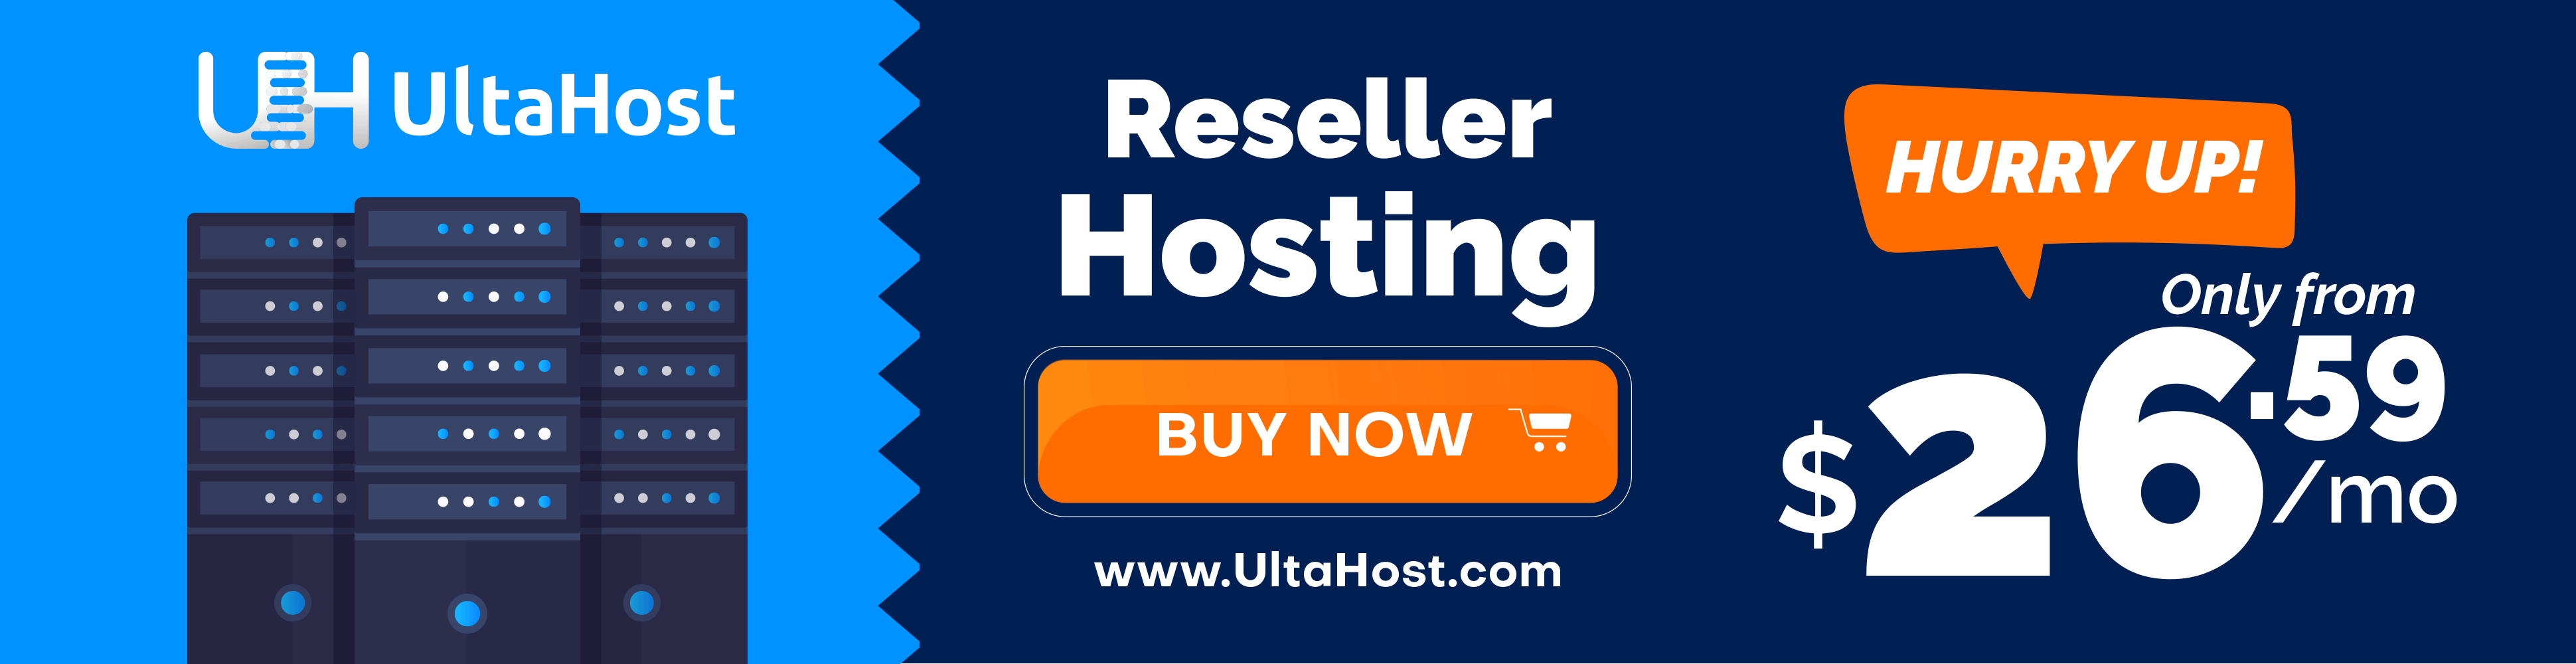 ultahost_cheap_reseller _hosting_970x250